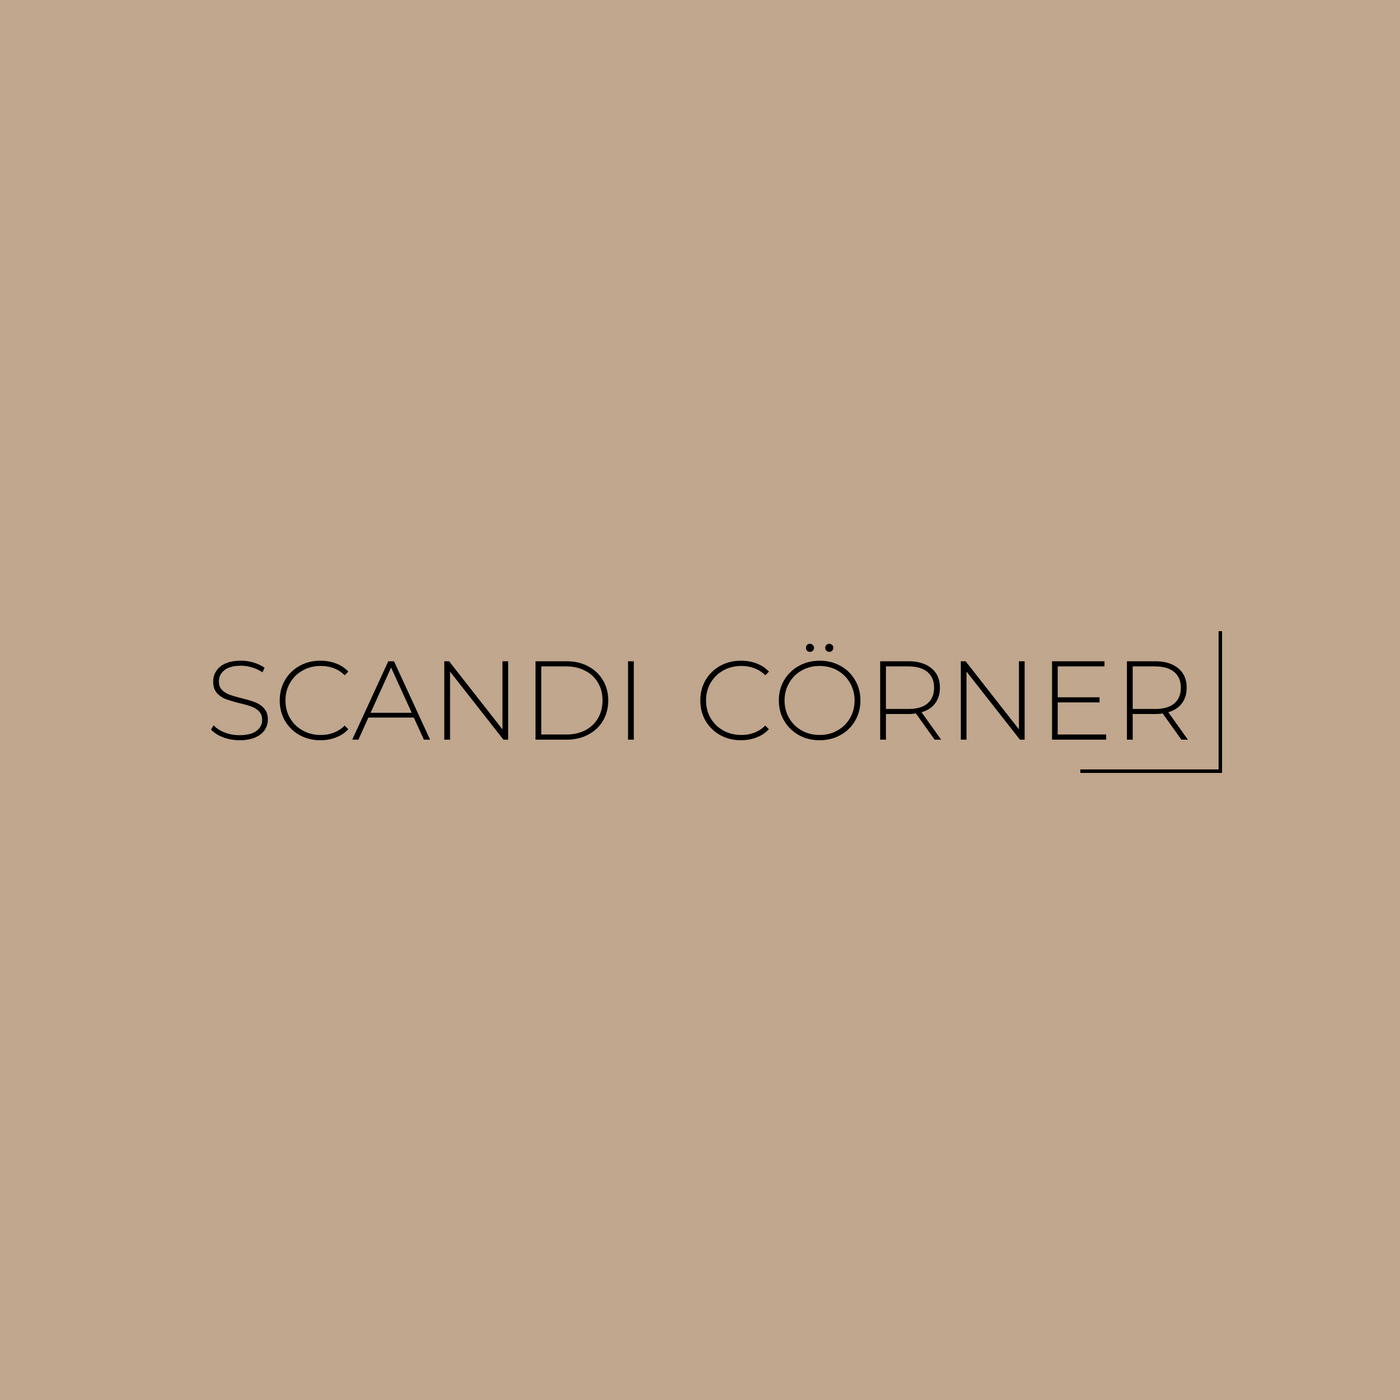 Scandi Corner Gift Card